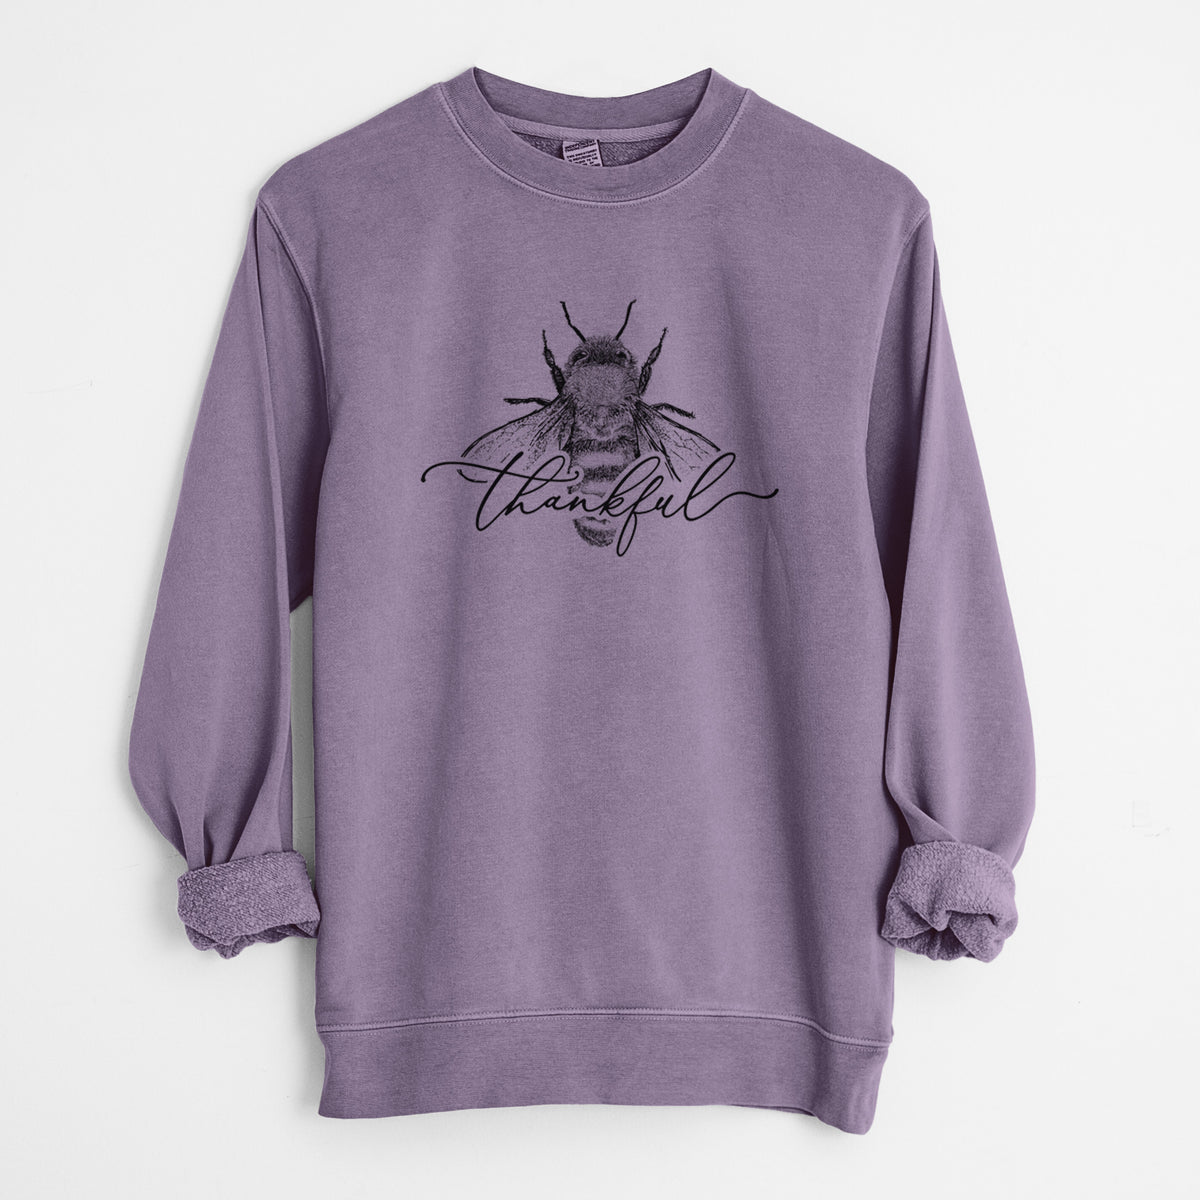 Bee Thankful - Unisex Pigment Dyed Crew Sweatshirt